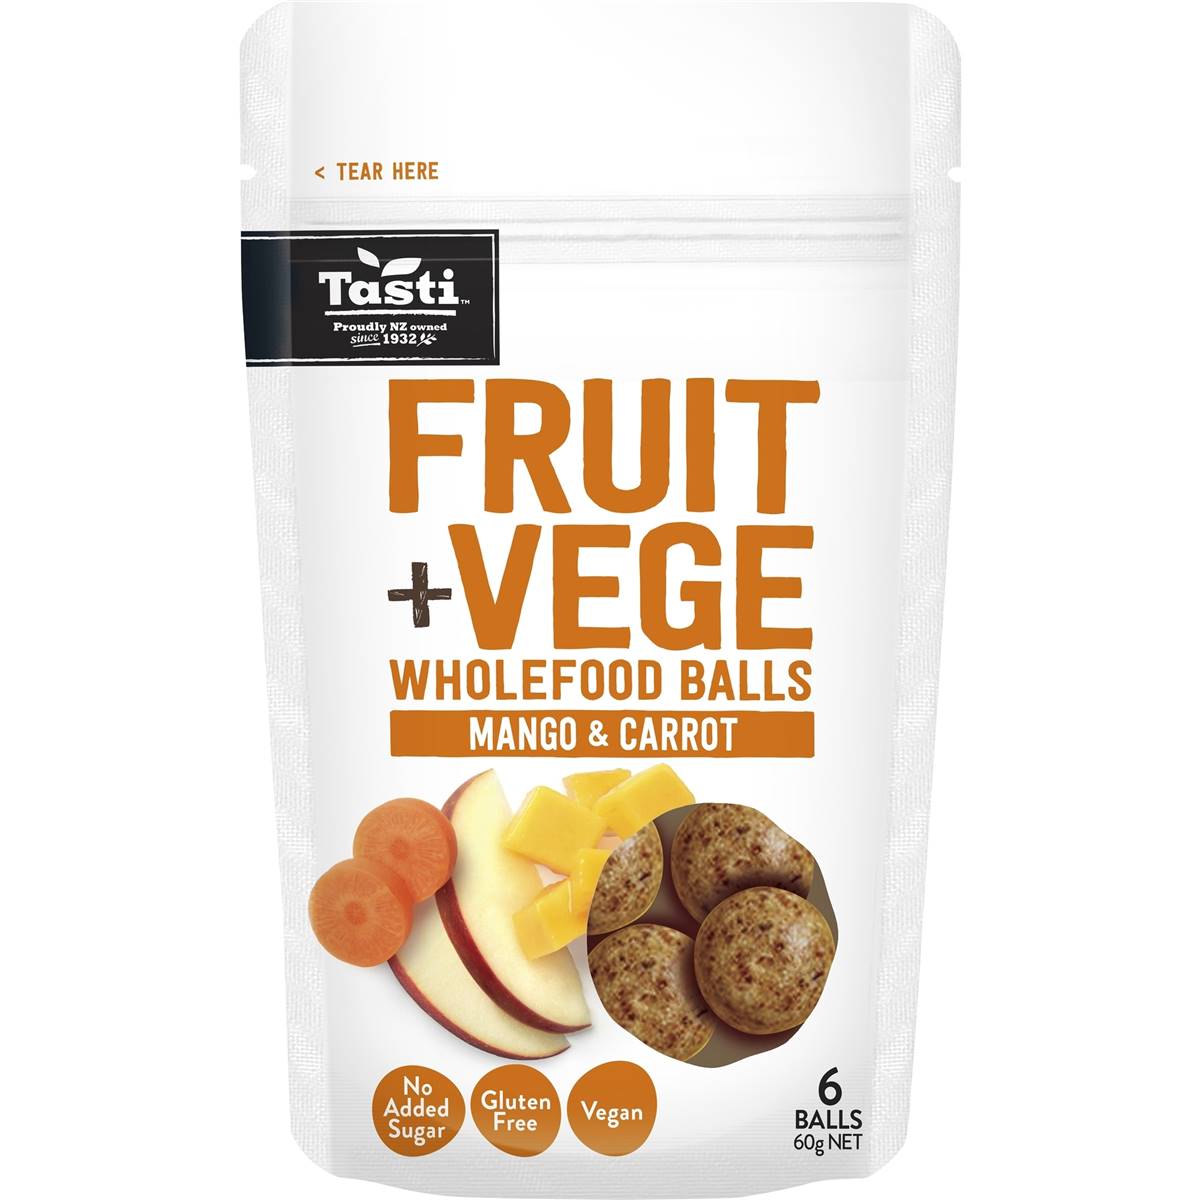 Calories in Tasti Fruit & Vege Wholefood Balls Mango & Carrot